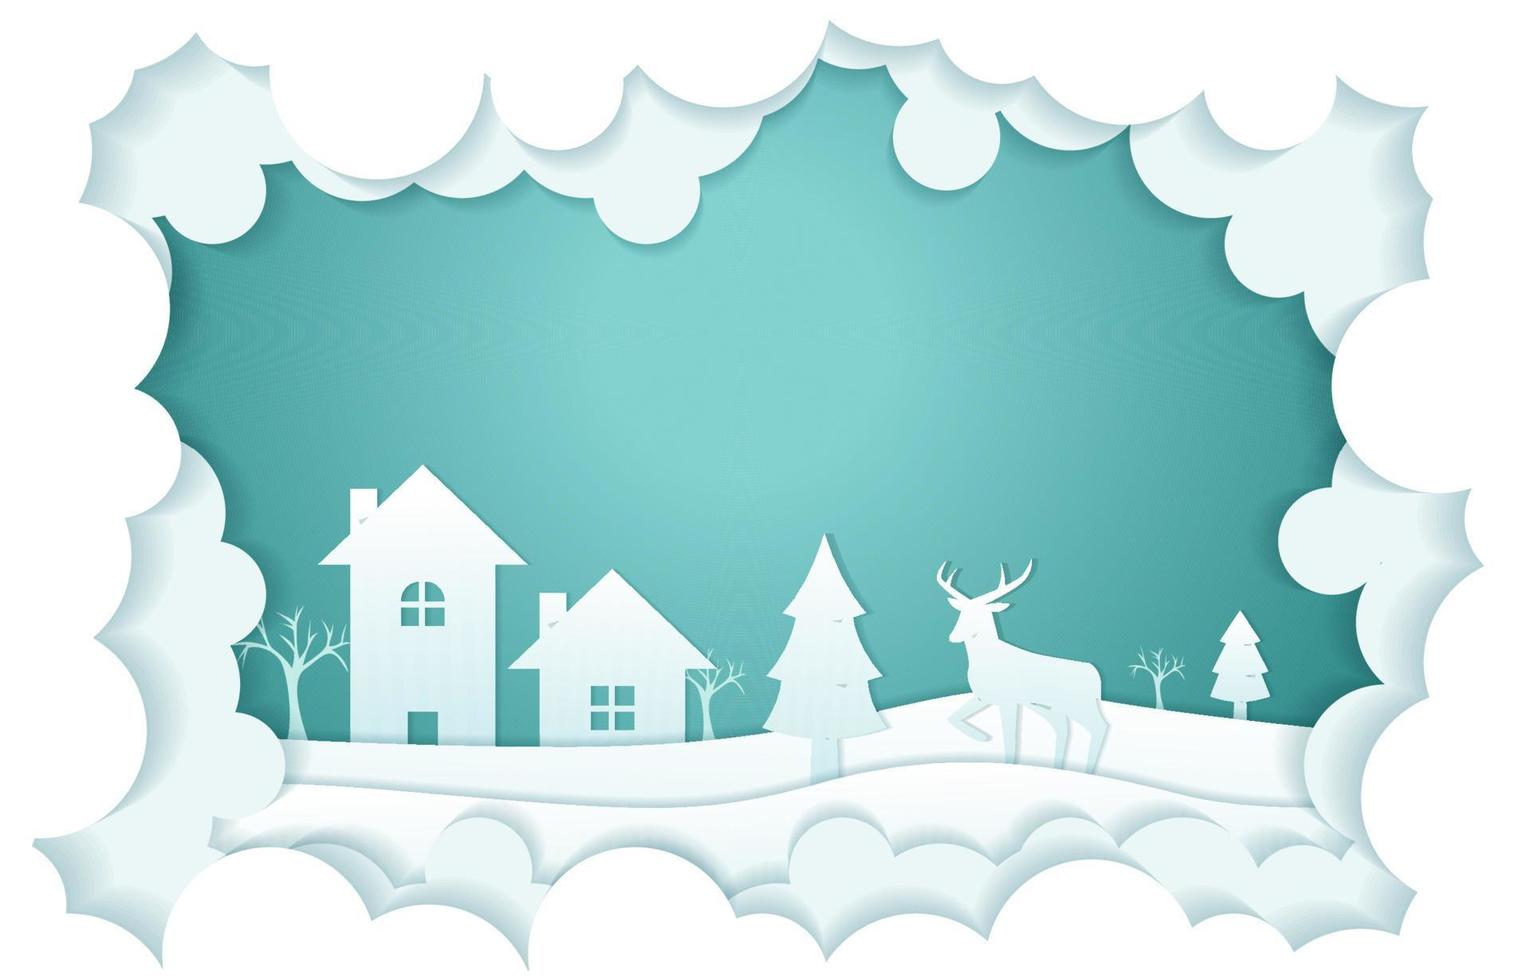 House Deer Tree Cloud Winter Papercut Paper Cut Style Illustration vector